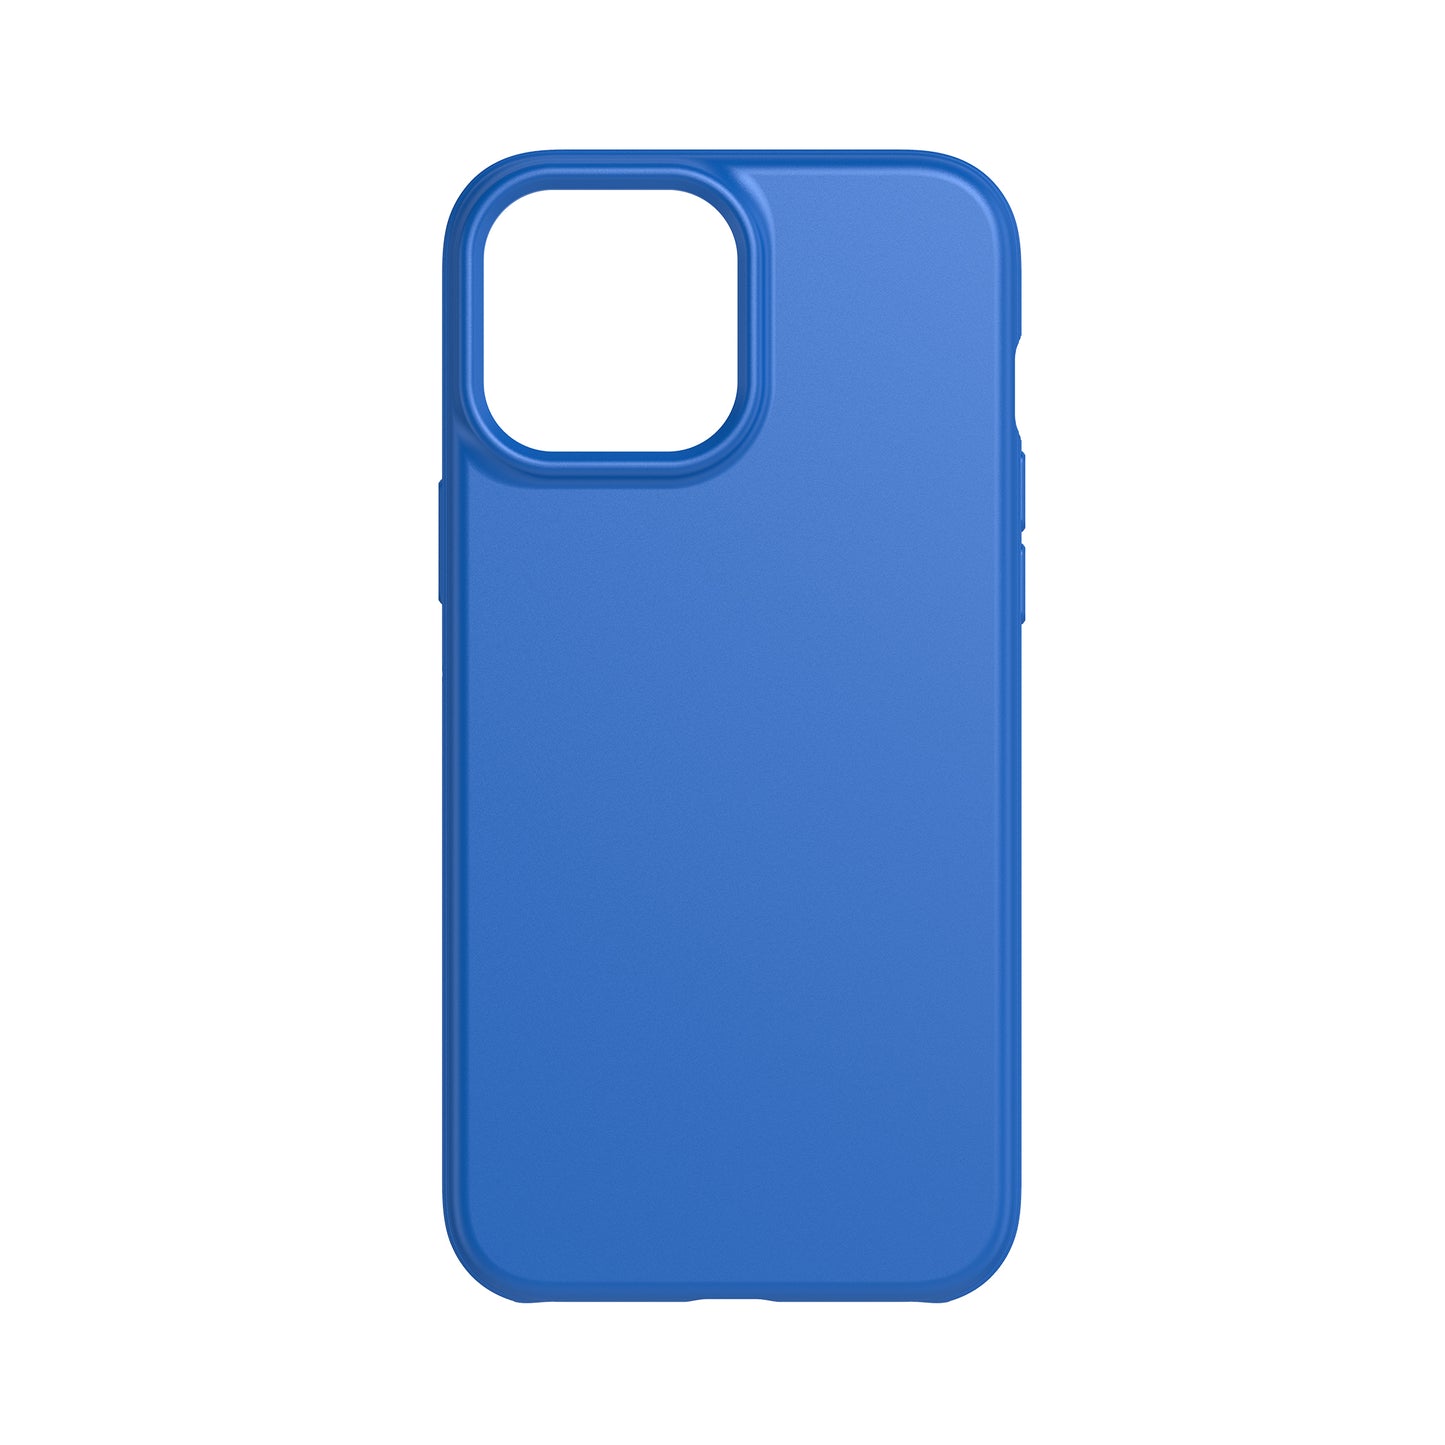 TECH21 EvoLite for iPhone 13 Pro Max - Classic Blue